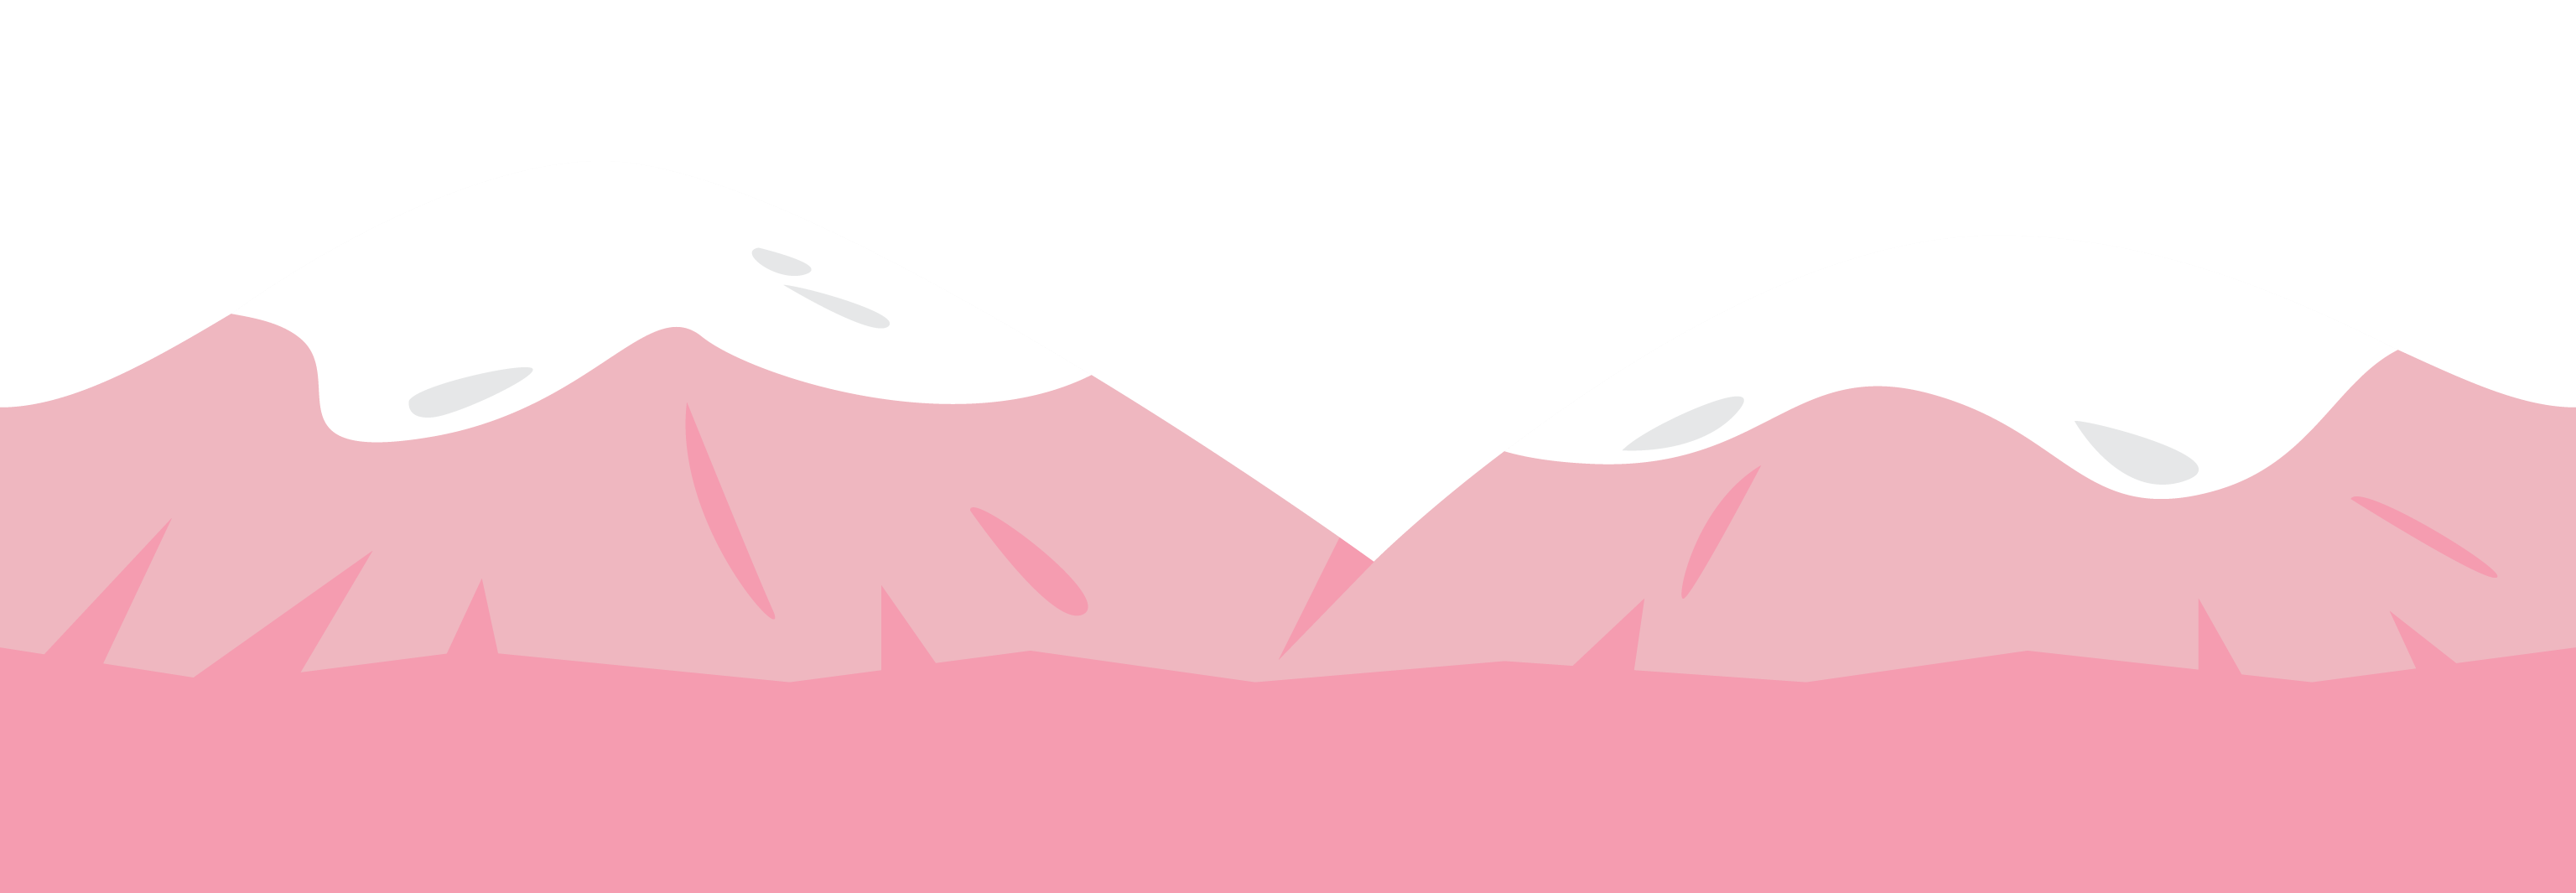 hitel-elmozdul-s-hat-konyan-pink-mountain-illustration-oltalmaz